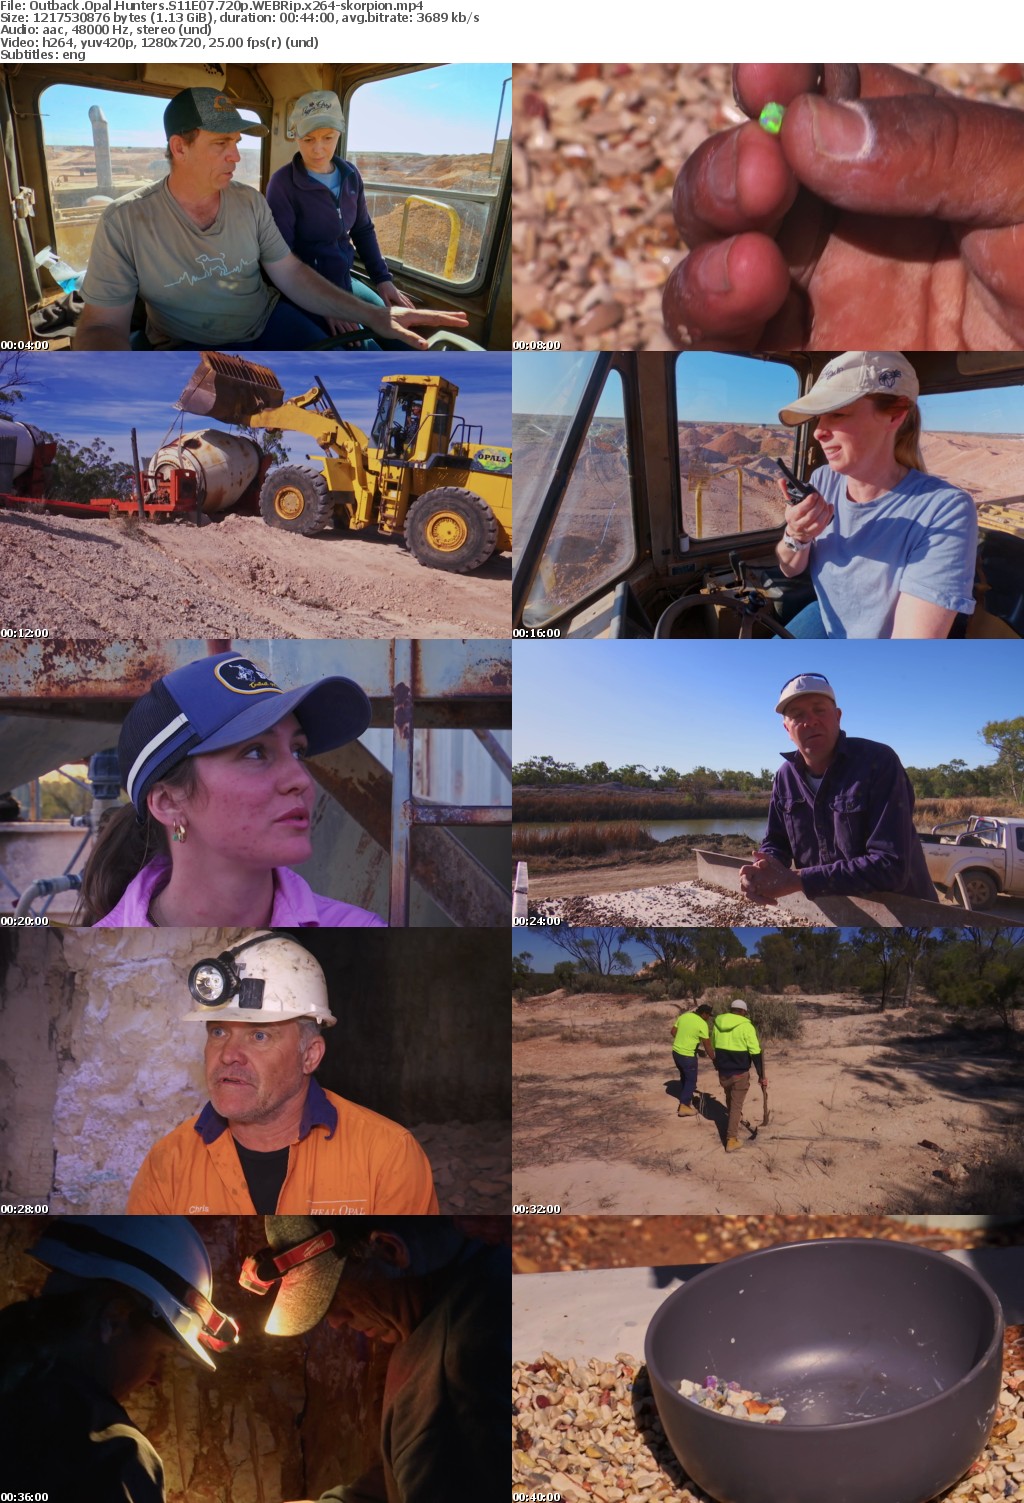 Outback Opal Hunters S11E07 720p WEBRip x264-skorpion mp4